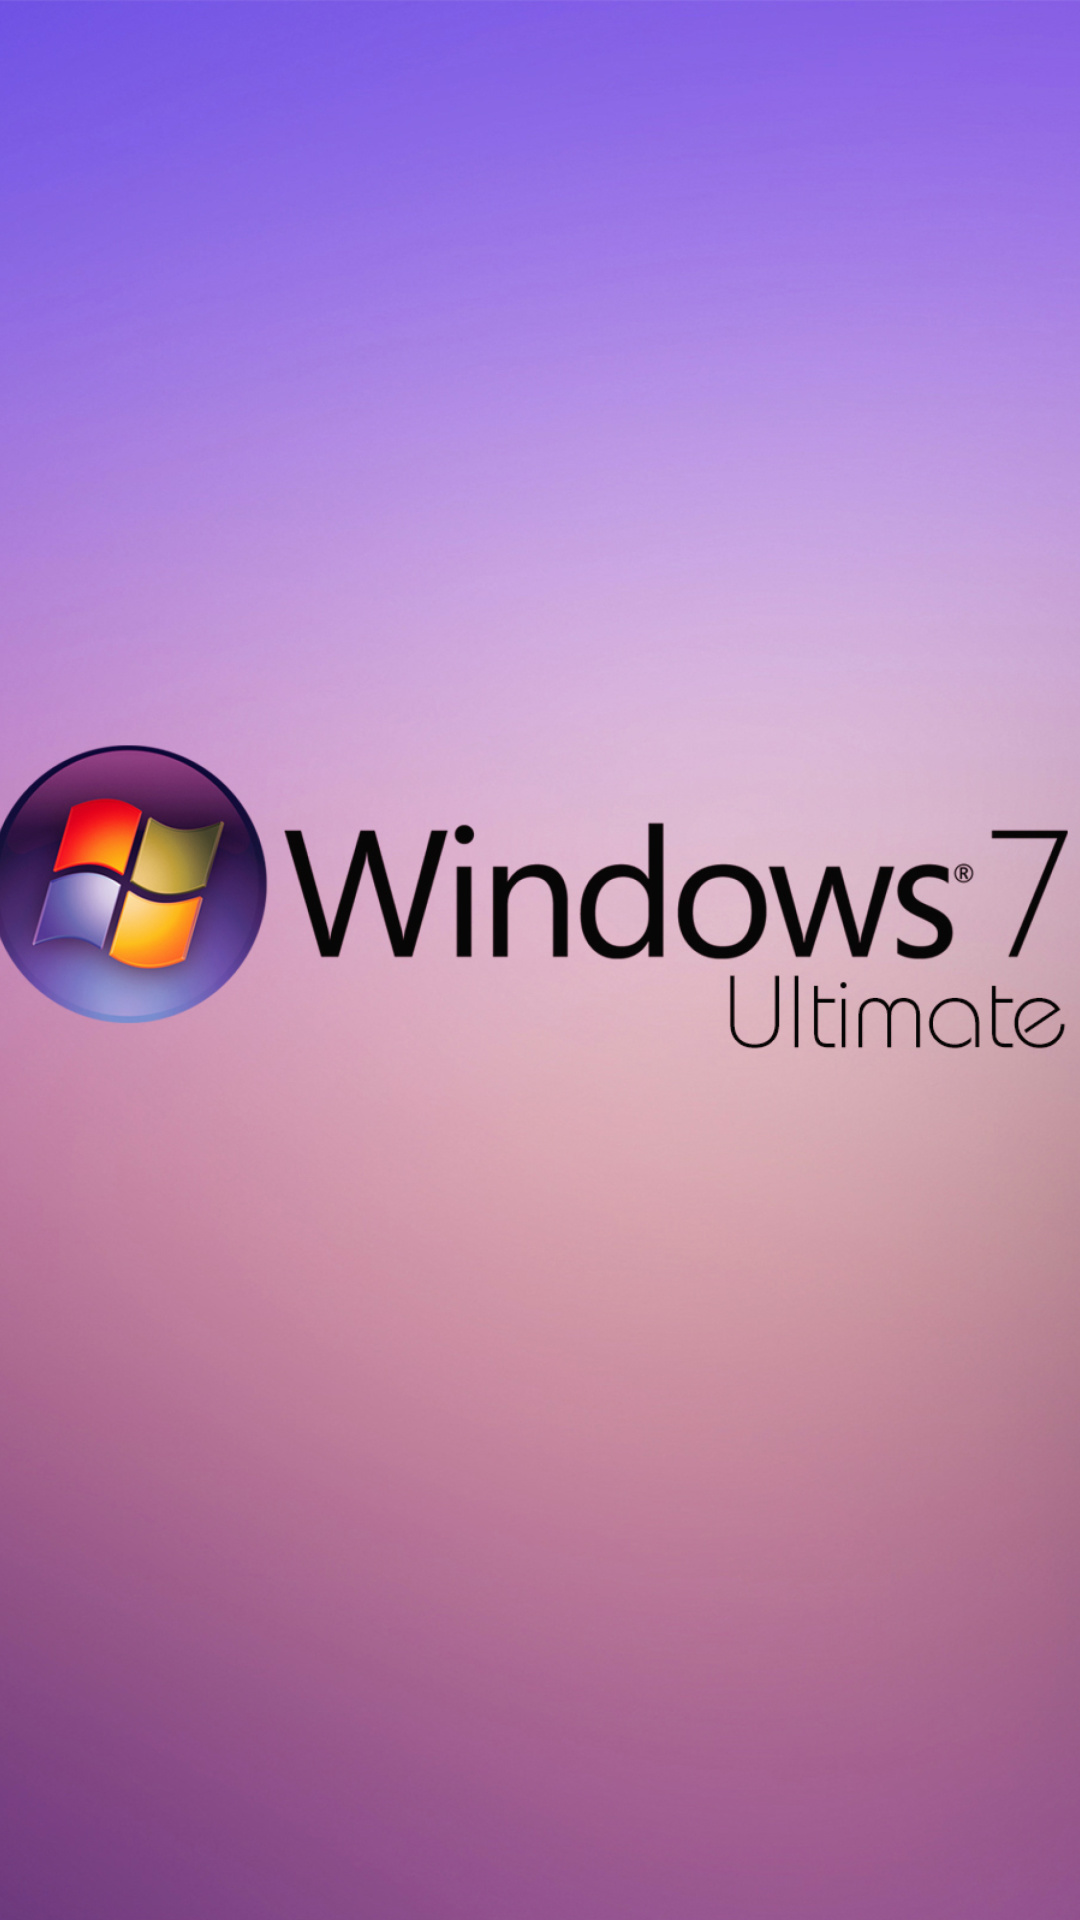 Windows 7 Ultimate wallpaper 1080x1920